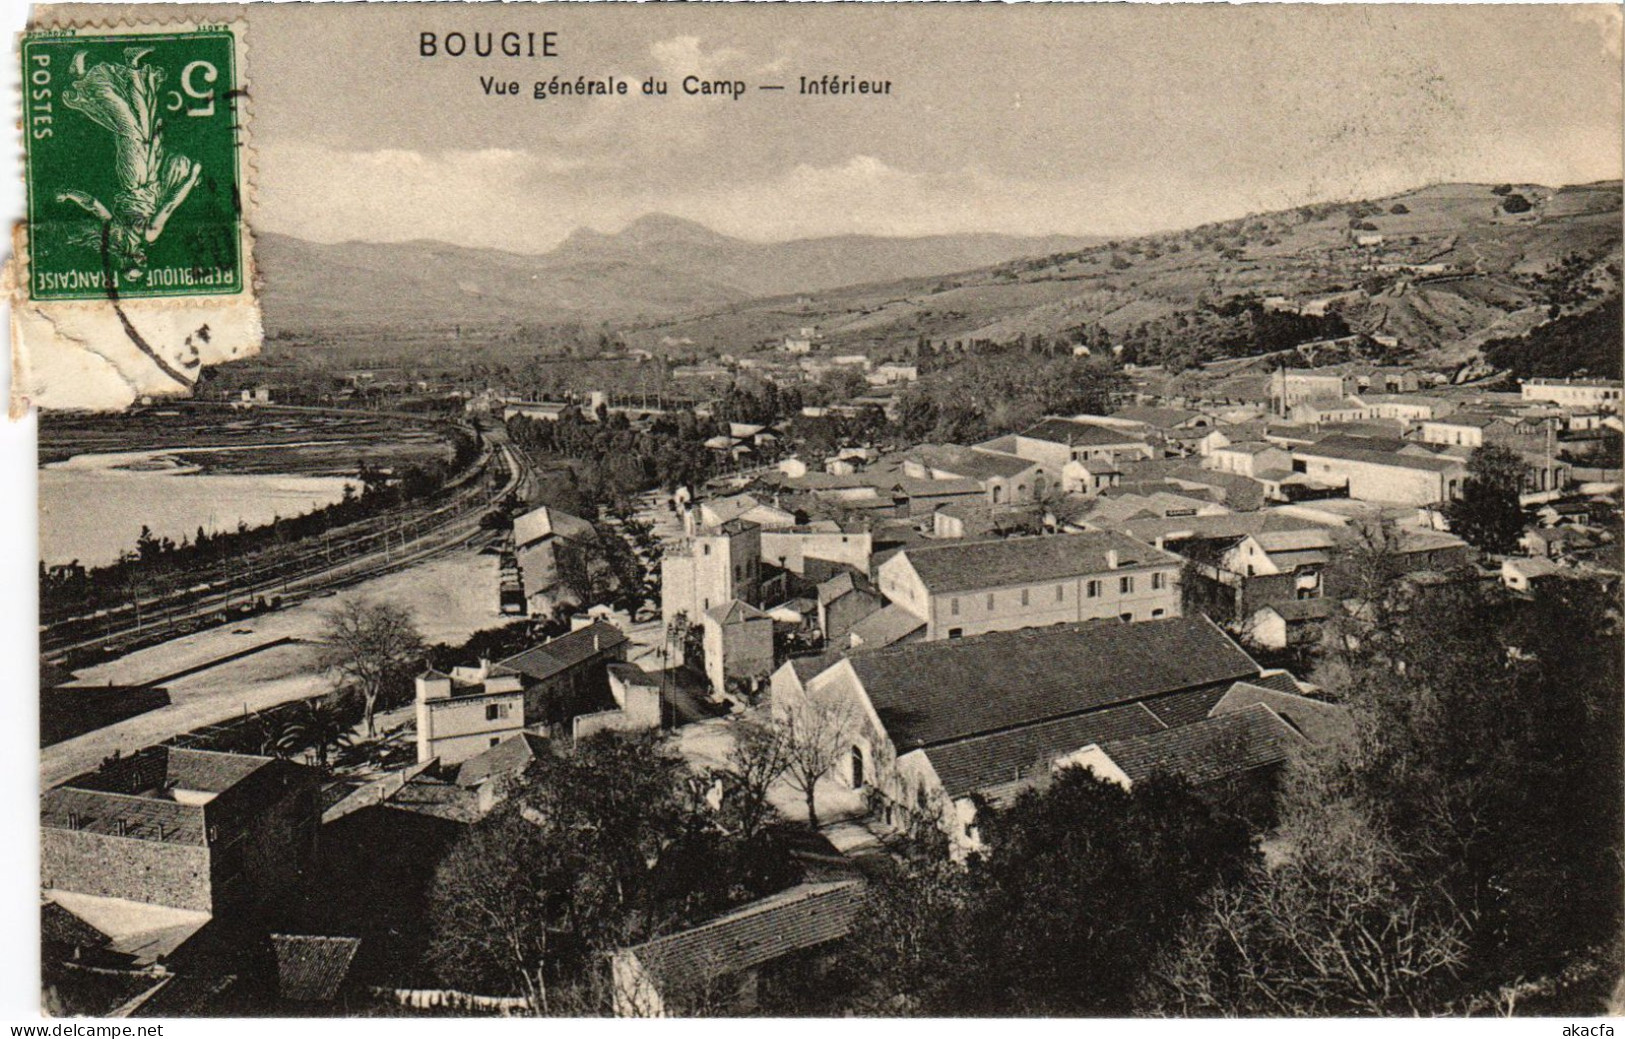 CPA AK BOUGIE Camp - Interieur - Vue Generale ALGERIA (1389575) - Bejaia (Bougie)